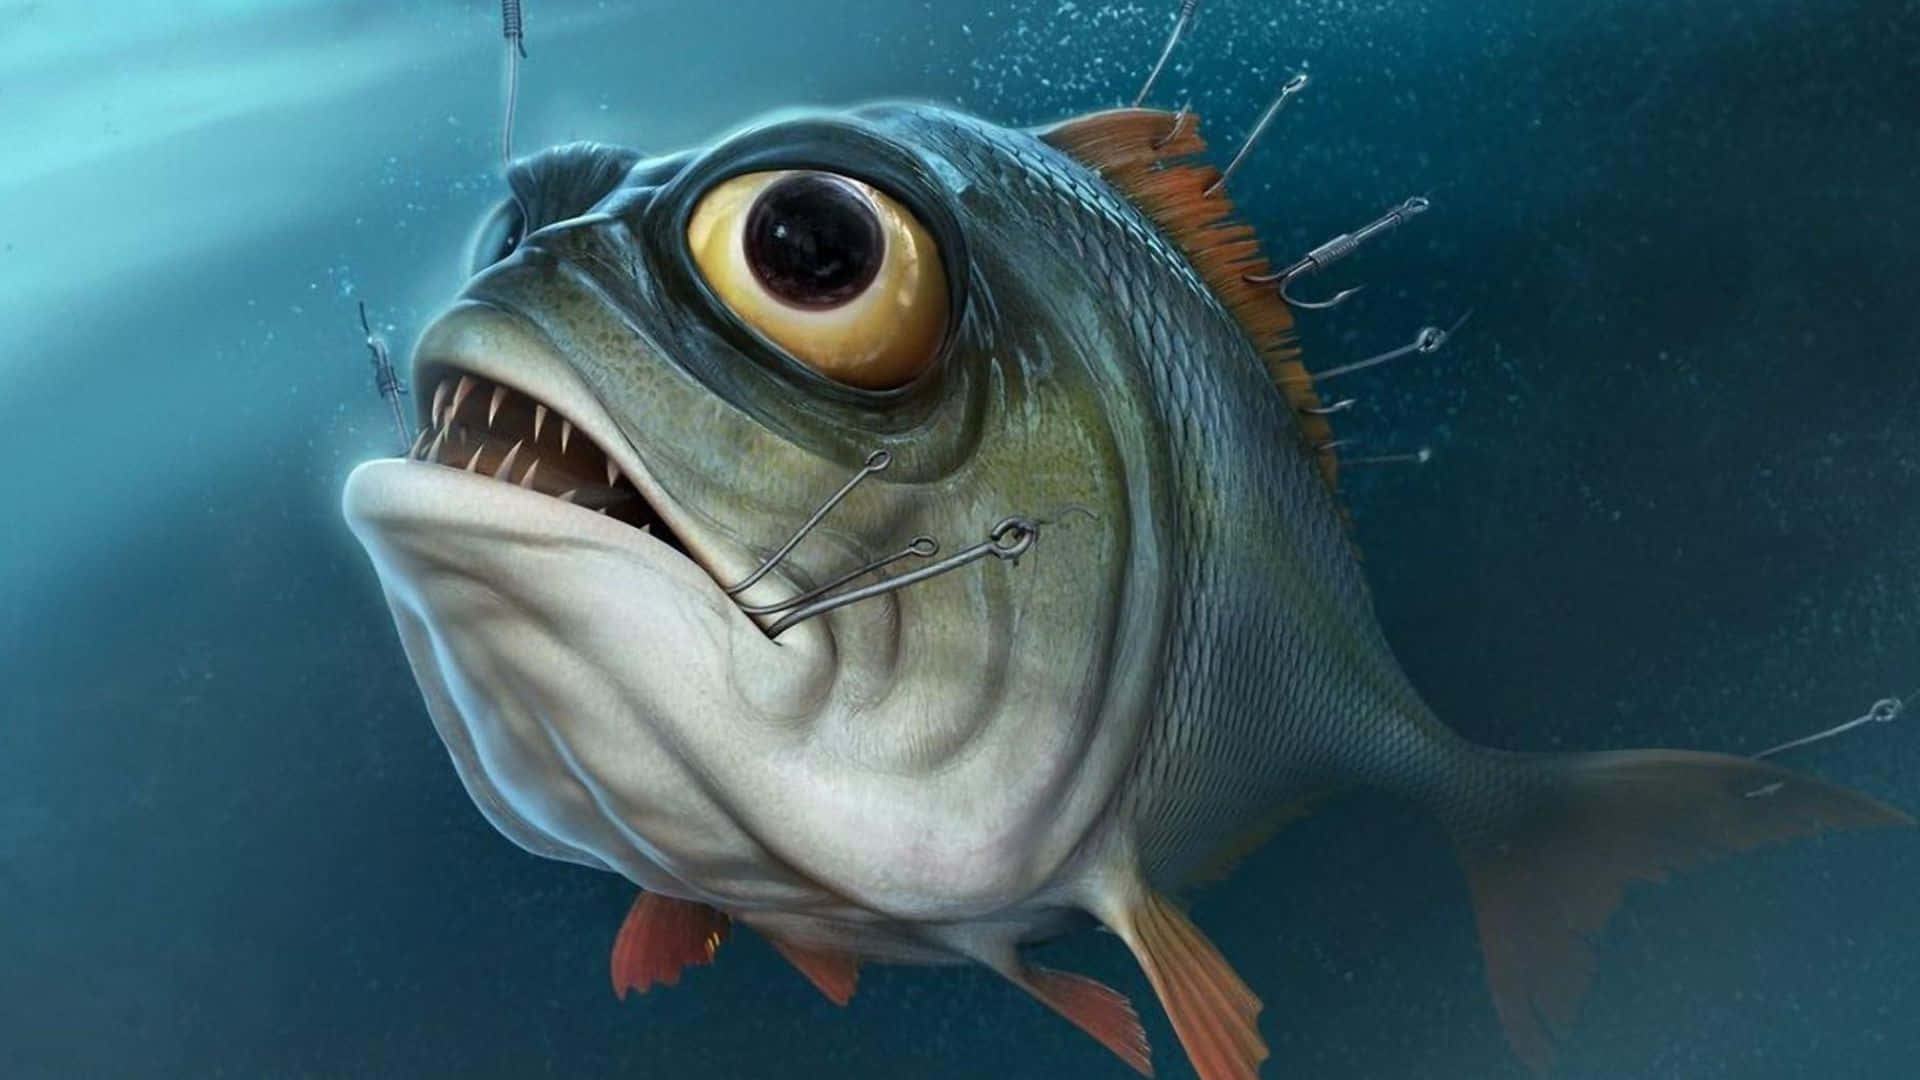 About 3D Live Fish HD Cool Wallpaper 2019  Koi Pond Google Play version    Apptopia